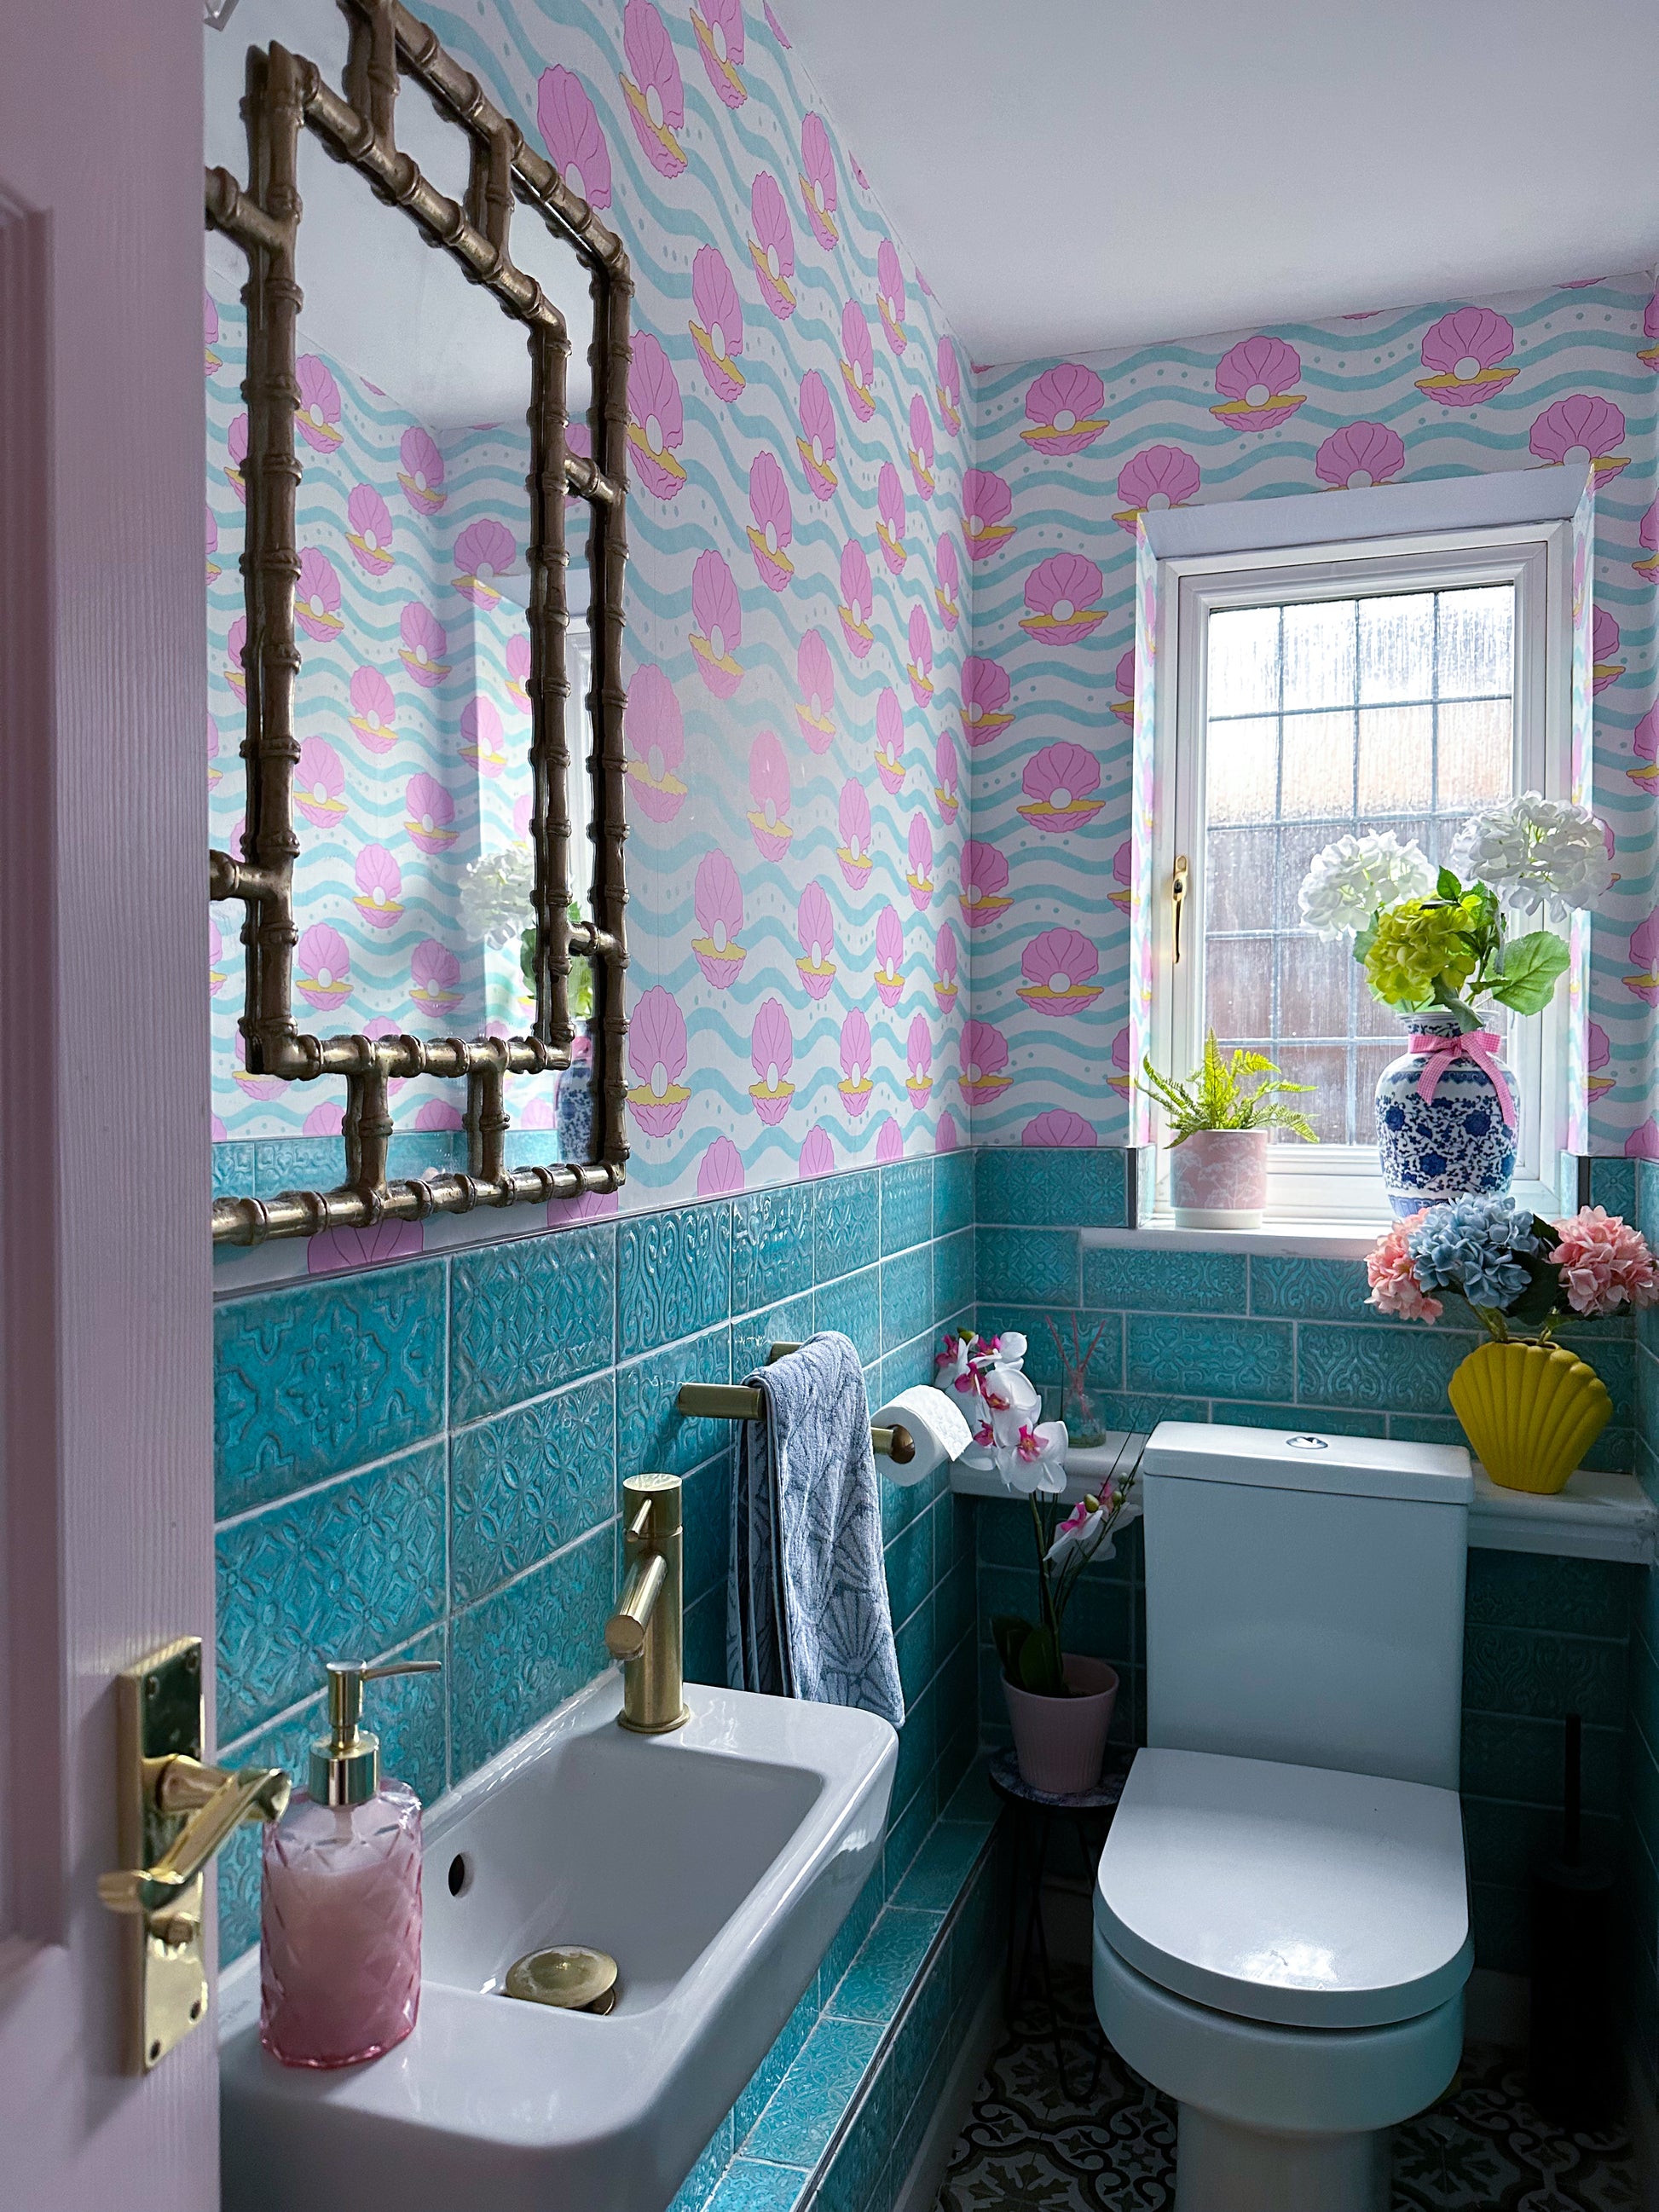 Clam shell sea theme wallpaper for bathrooms